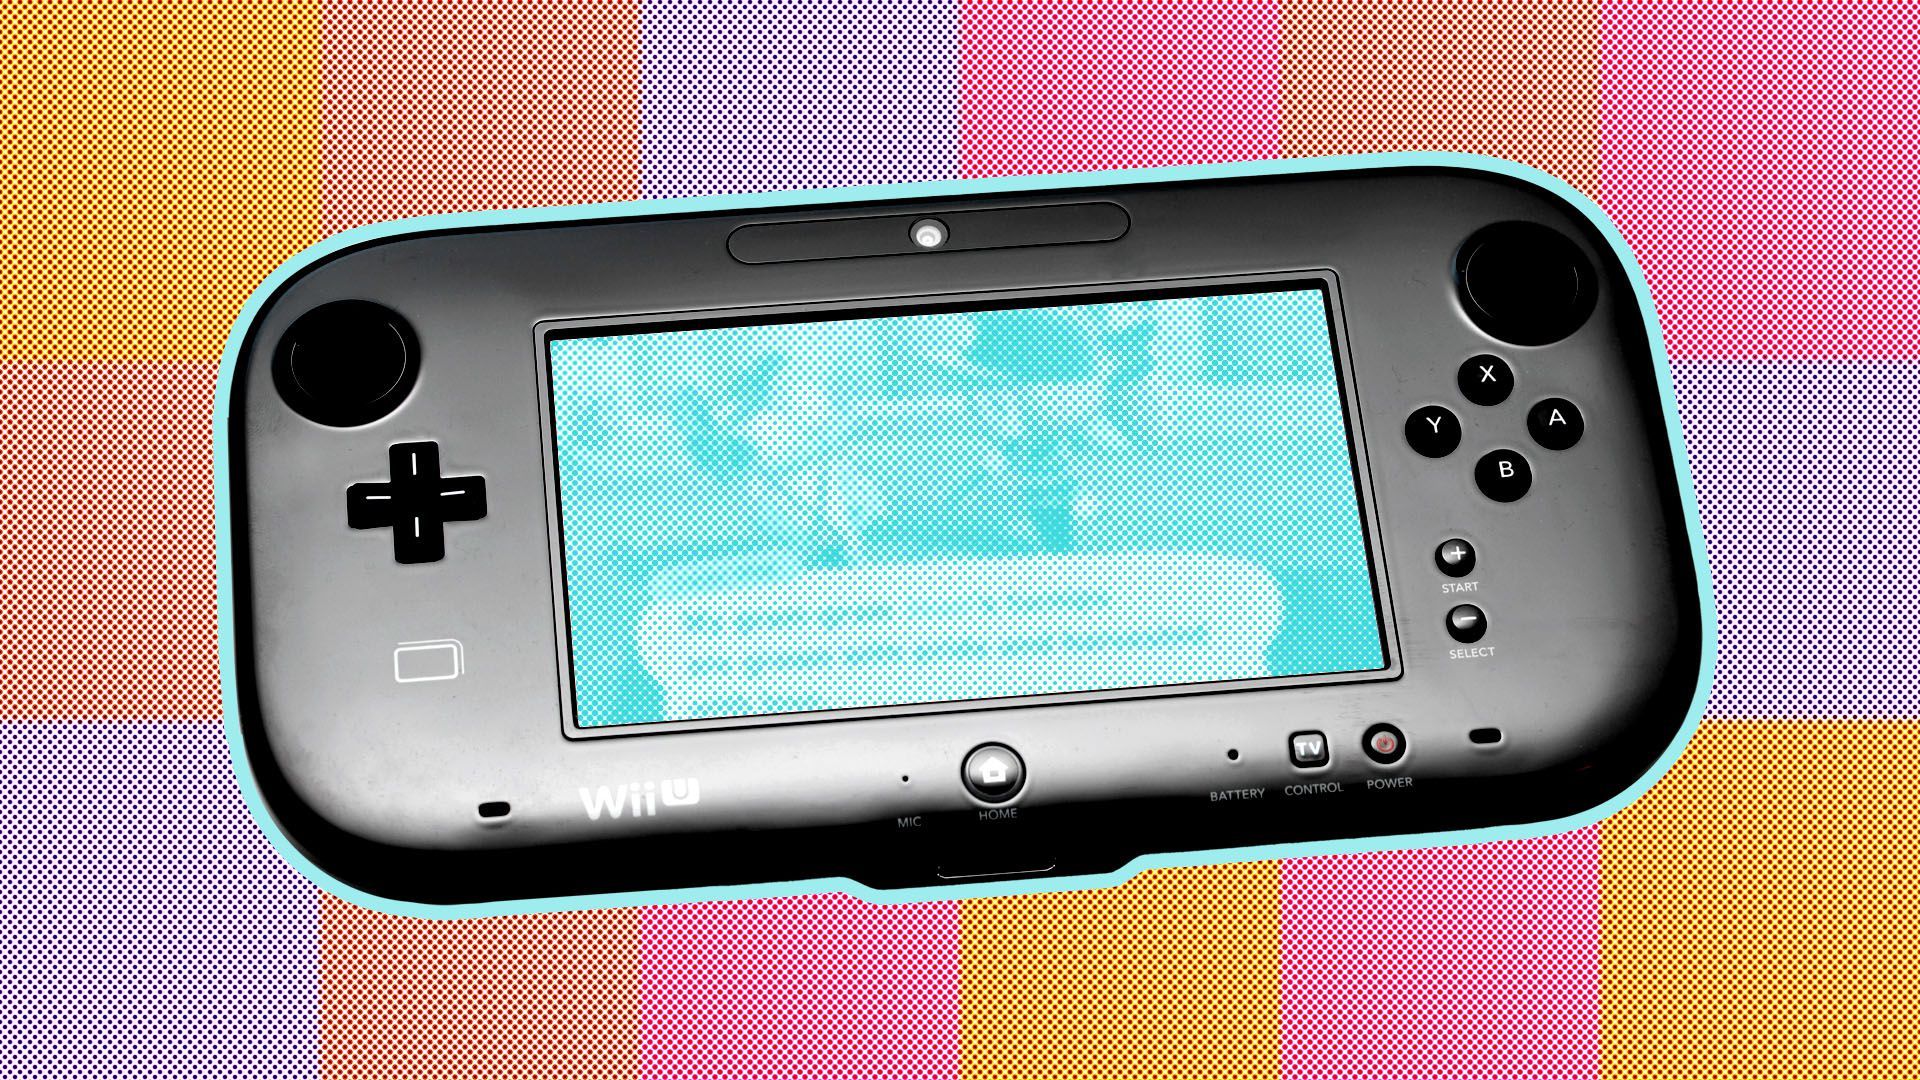 Illustration of a Wii U on a patterned background